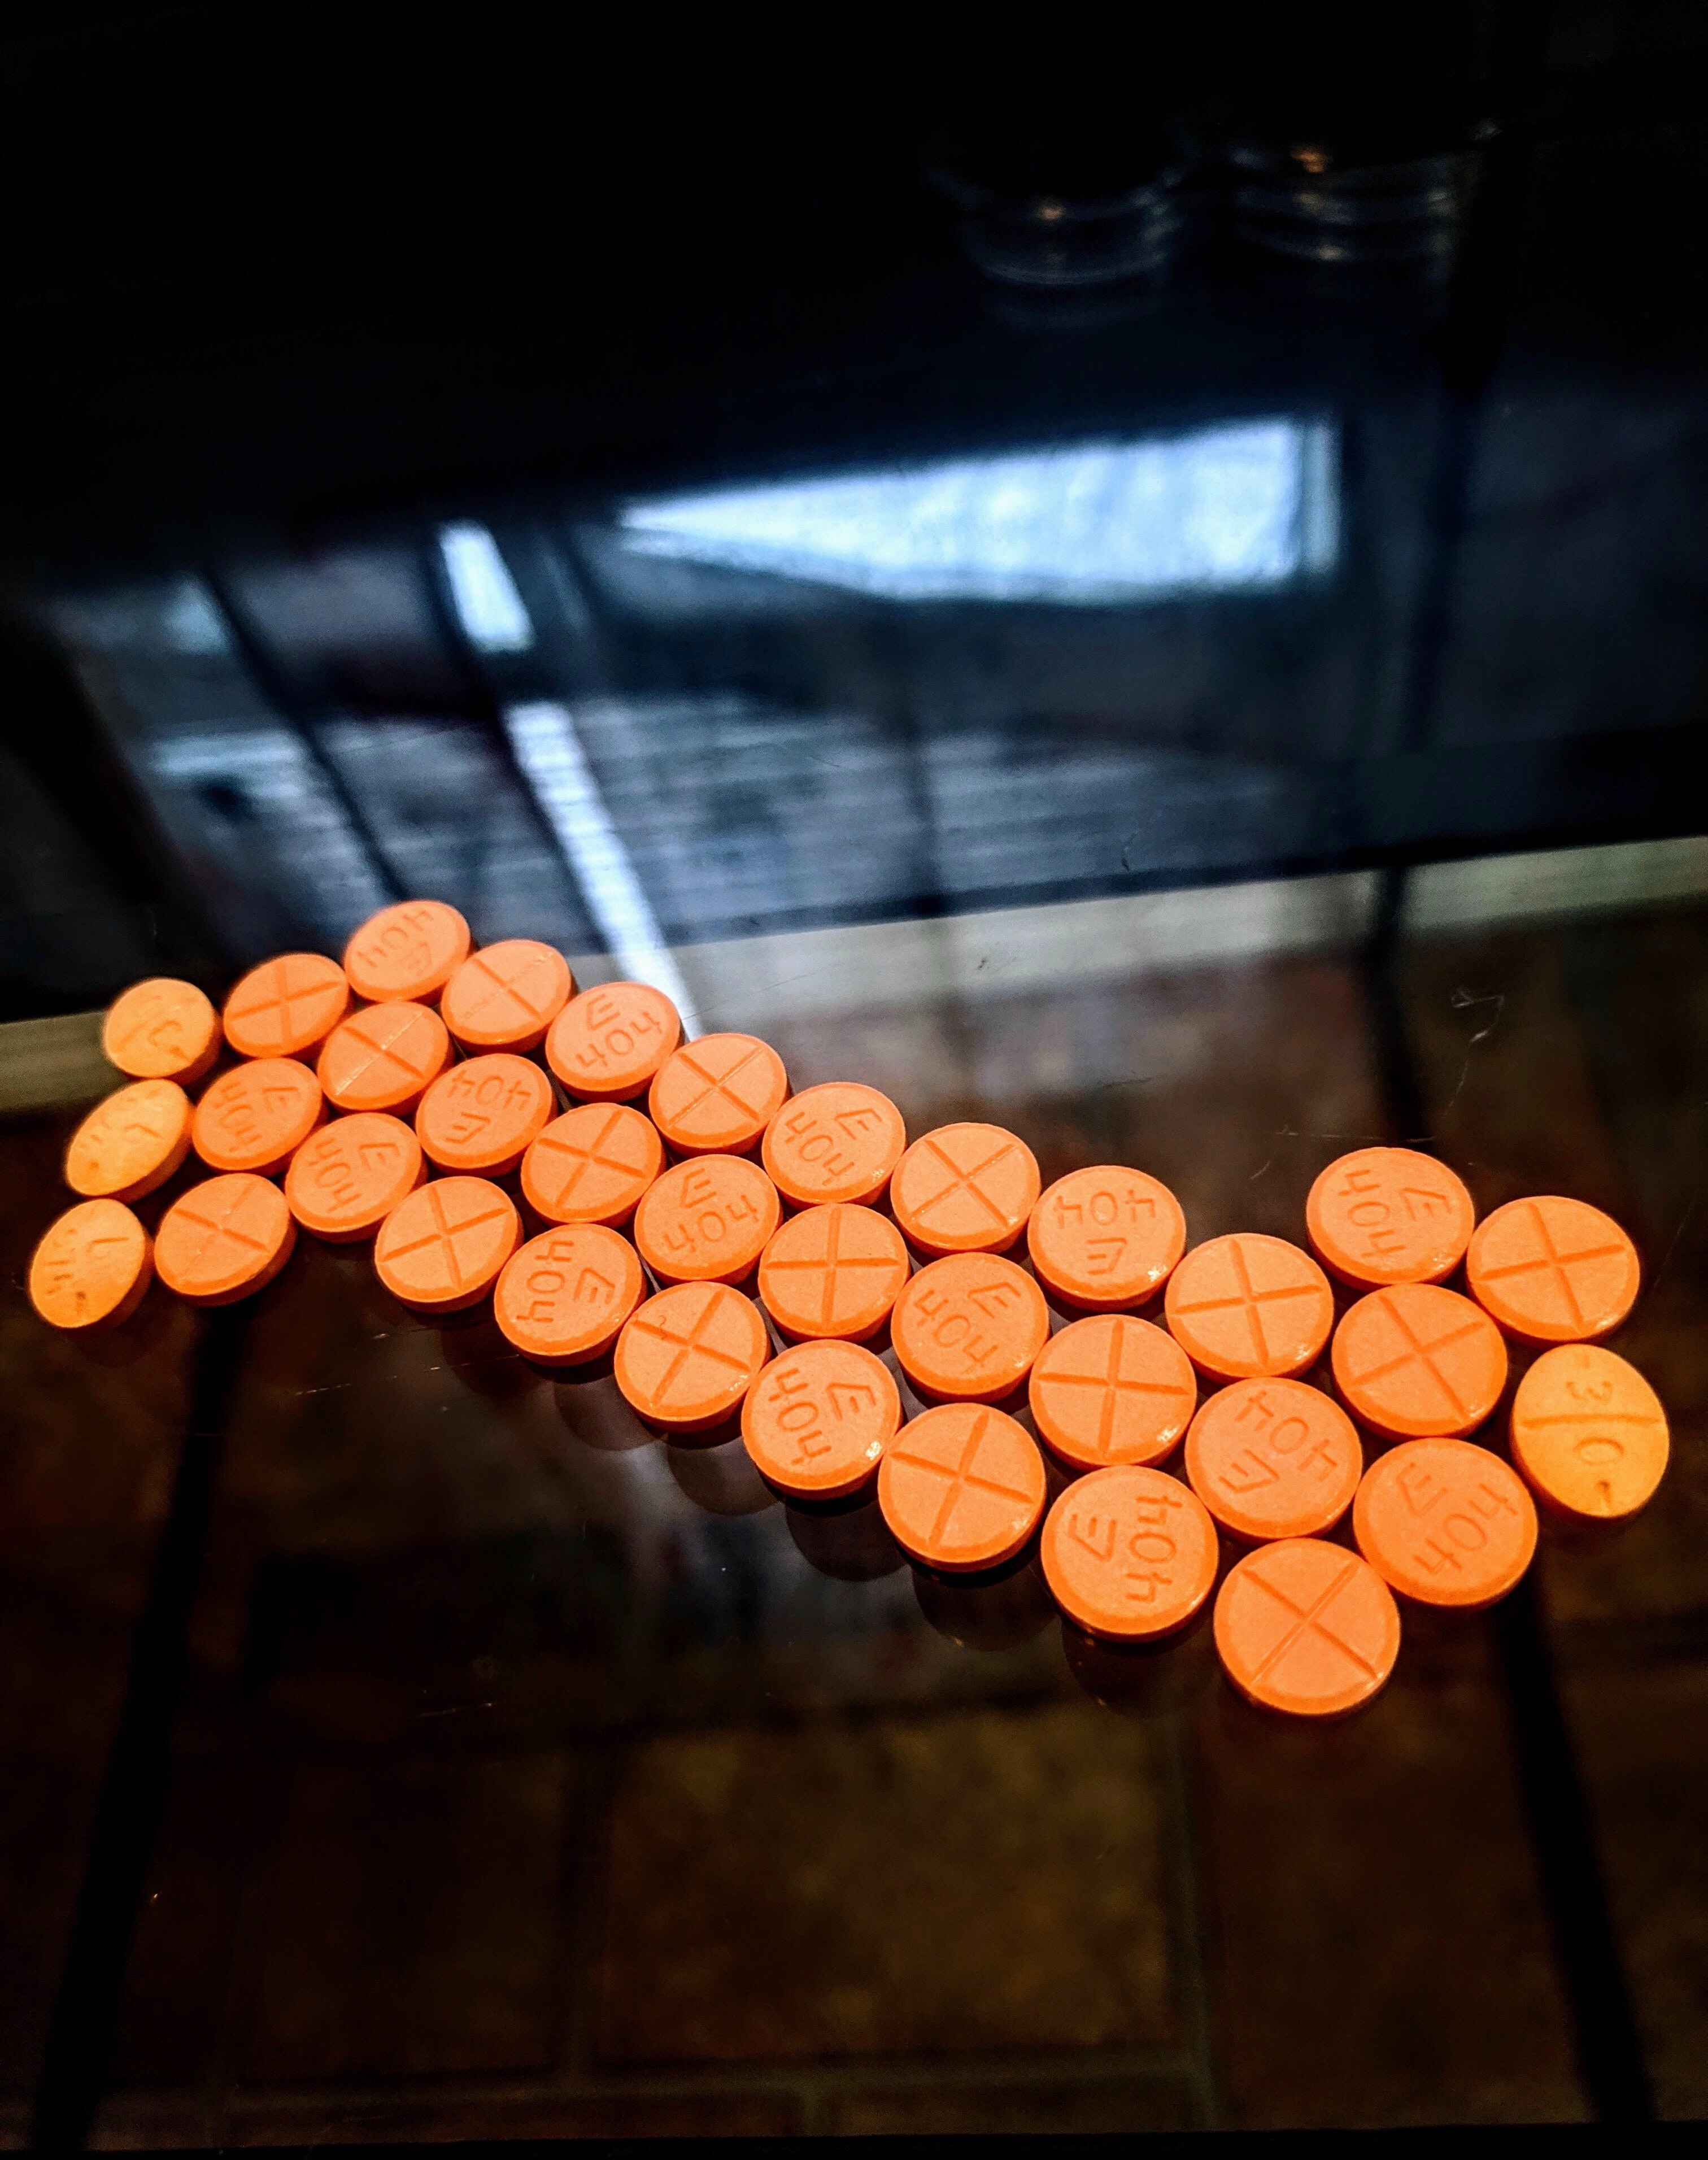 Adderall orange pills; image by James Paul, via Unsplash.com.